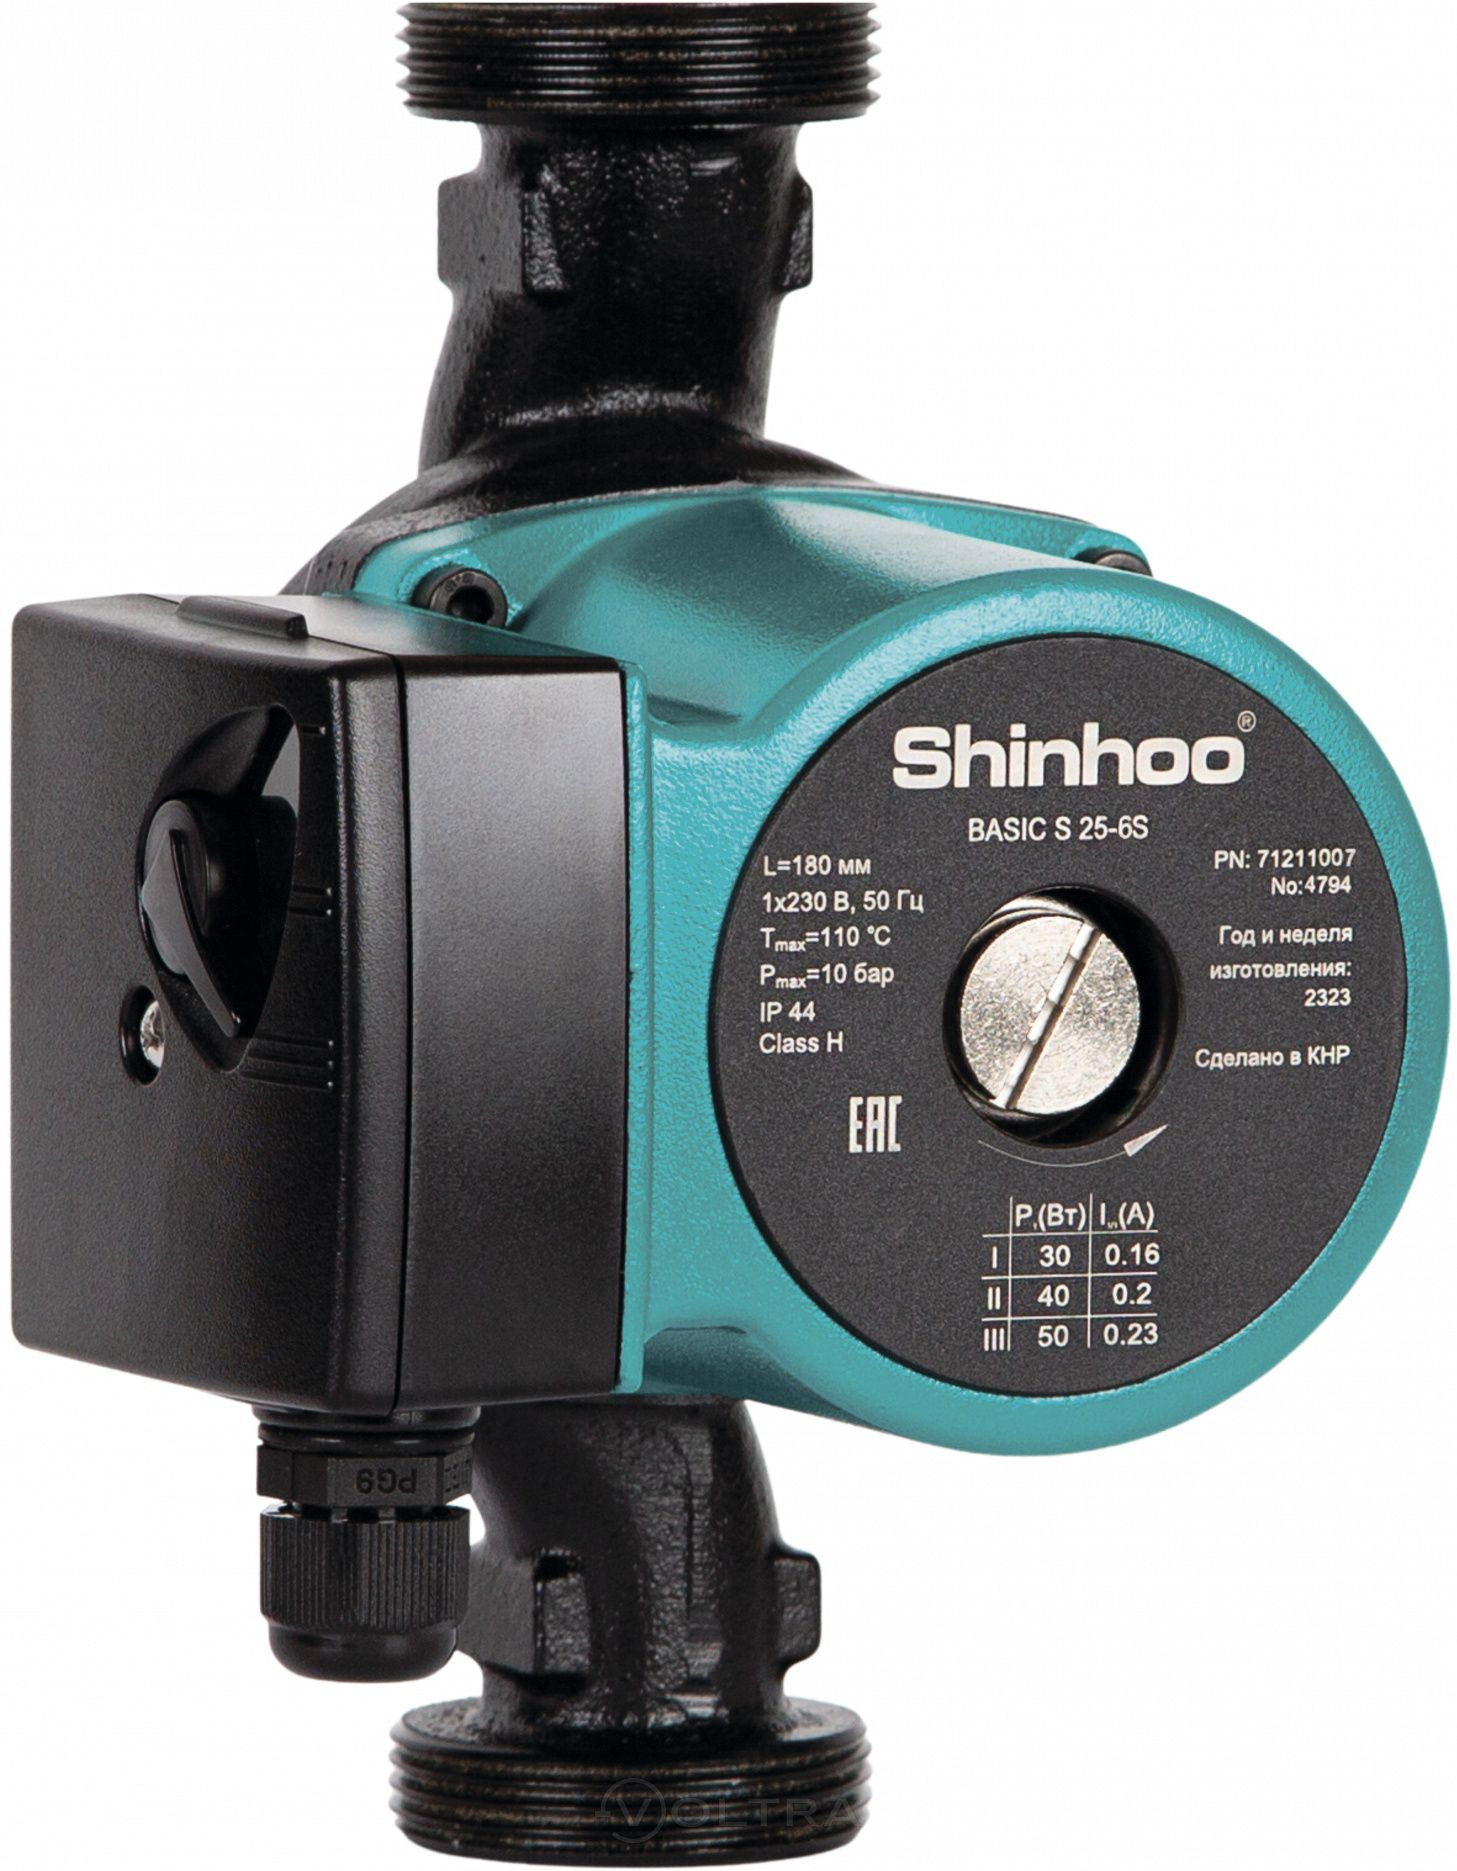 SHINHOO BASIC S 25-6S 130